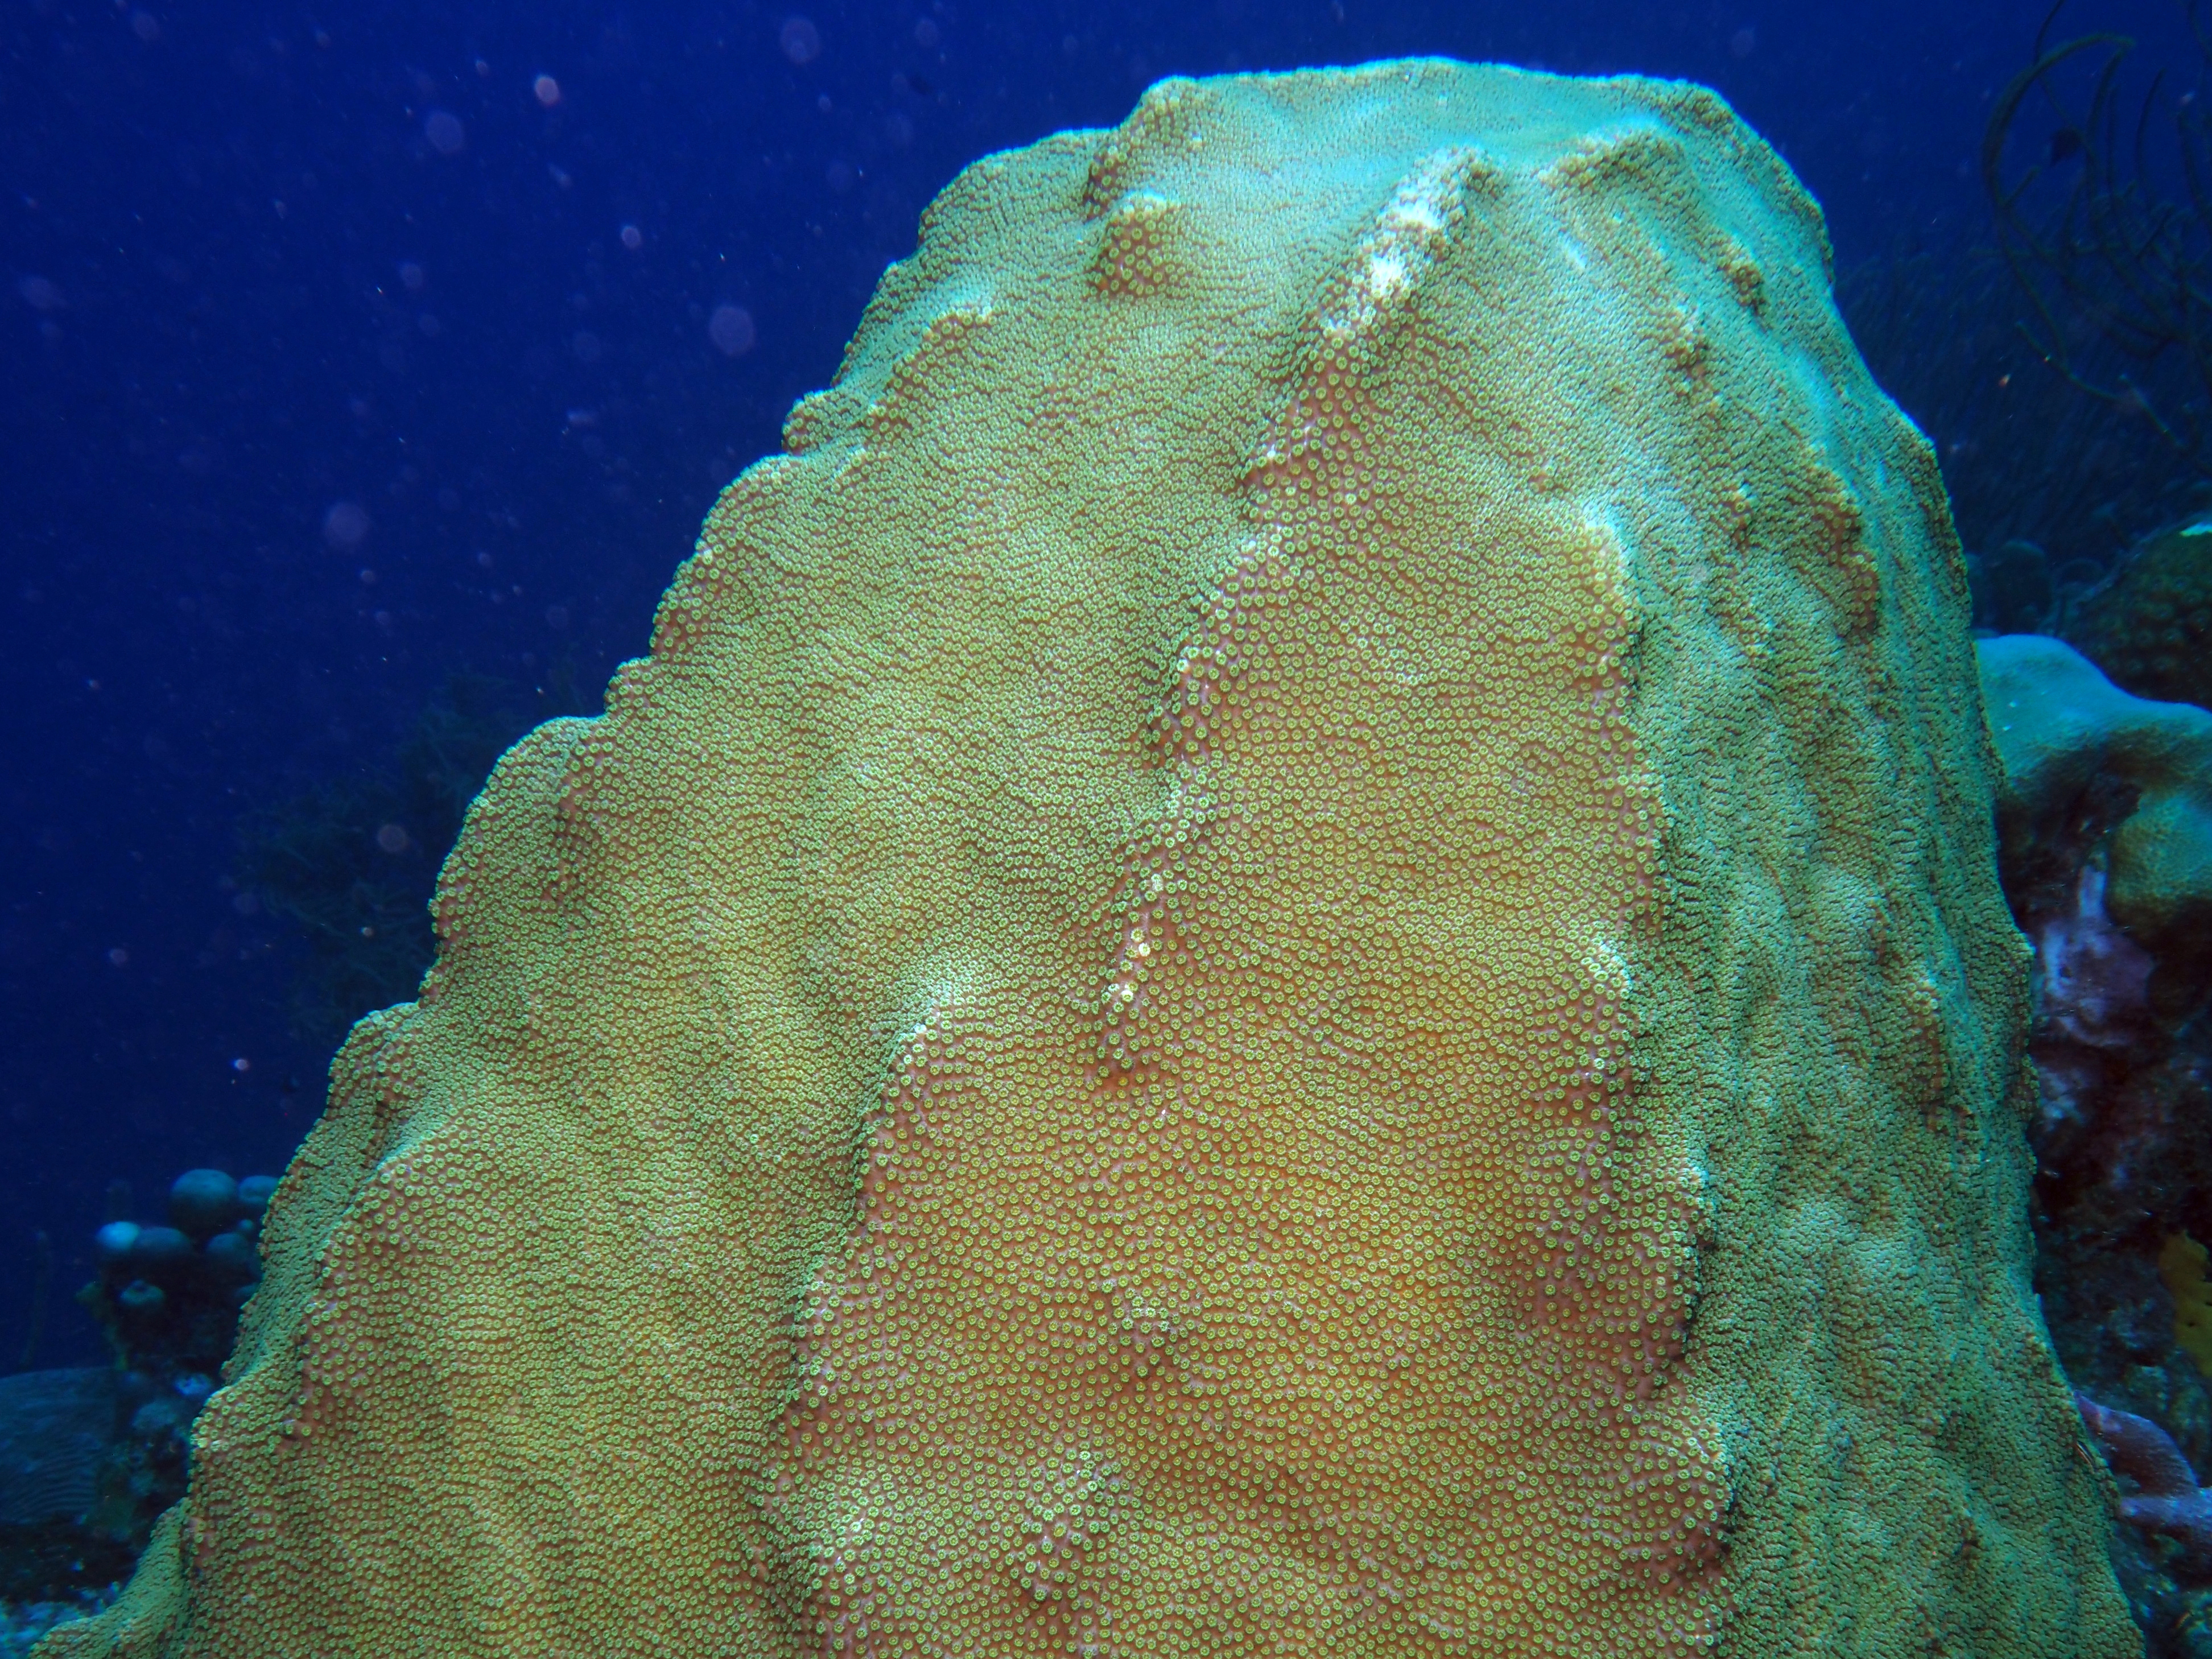 Mountainous Star Coral - Orbicella faveolata